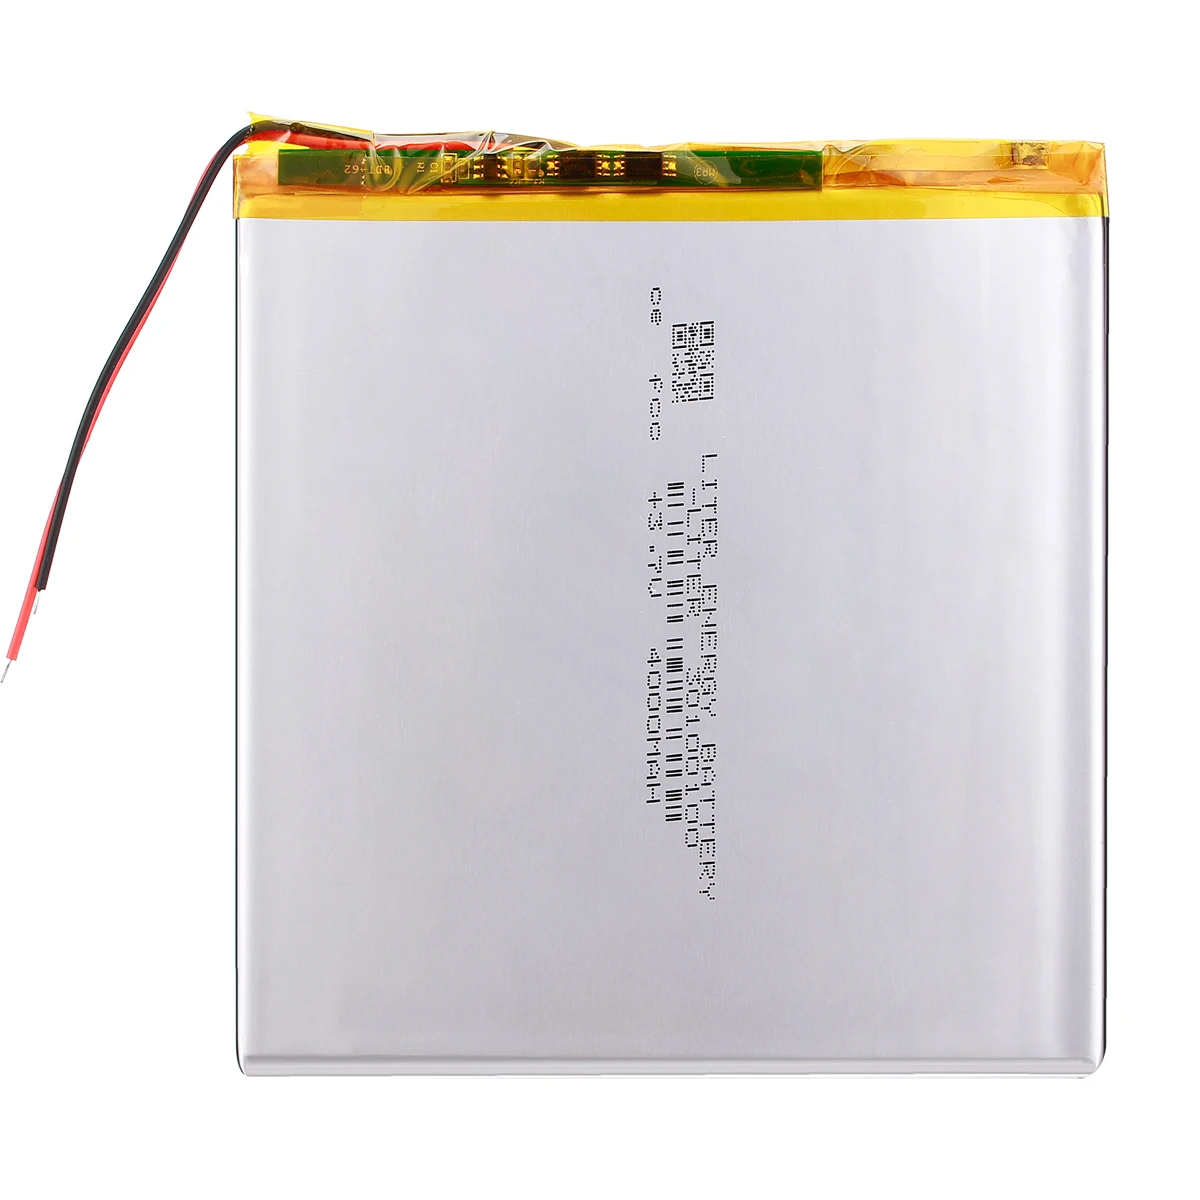 30100100 3.7V 4000mAh lithium polymer battery For Tablet PC Ainol Aurora texet TM-7858 ТМ7838 lrbis TZ 871,Dexp L180